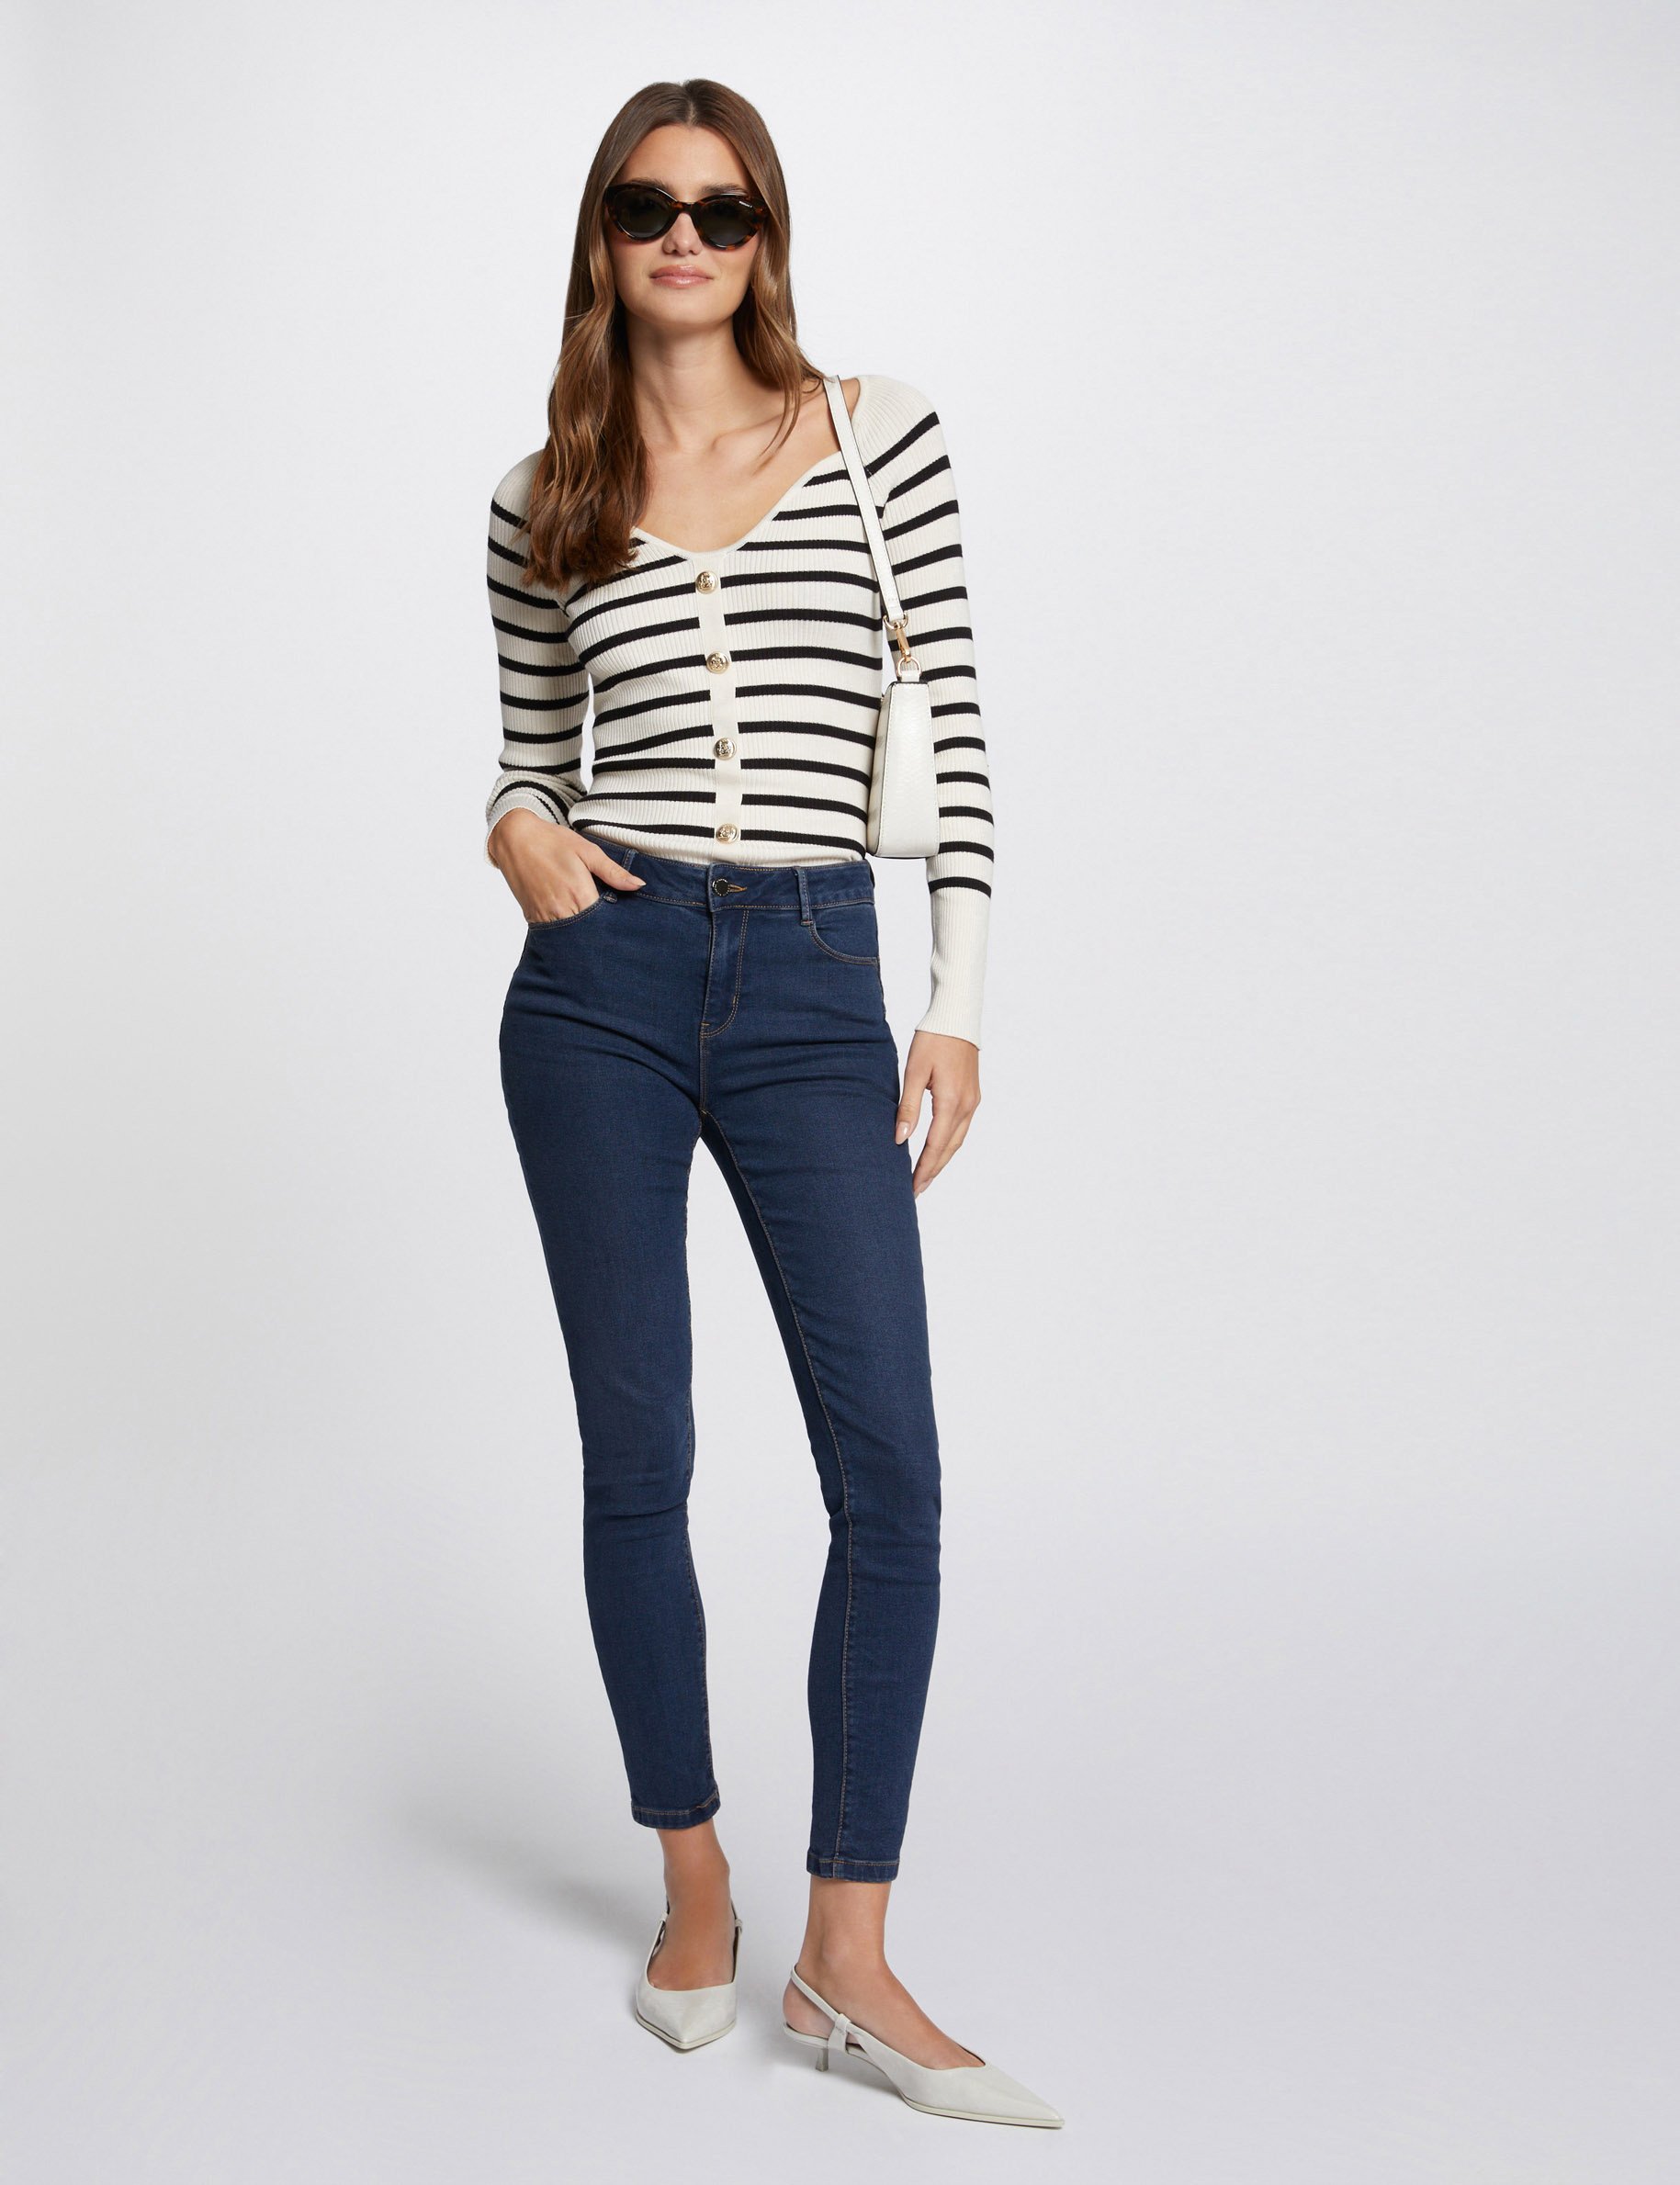 Jeans slim taille standard jean brut femme